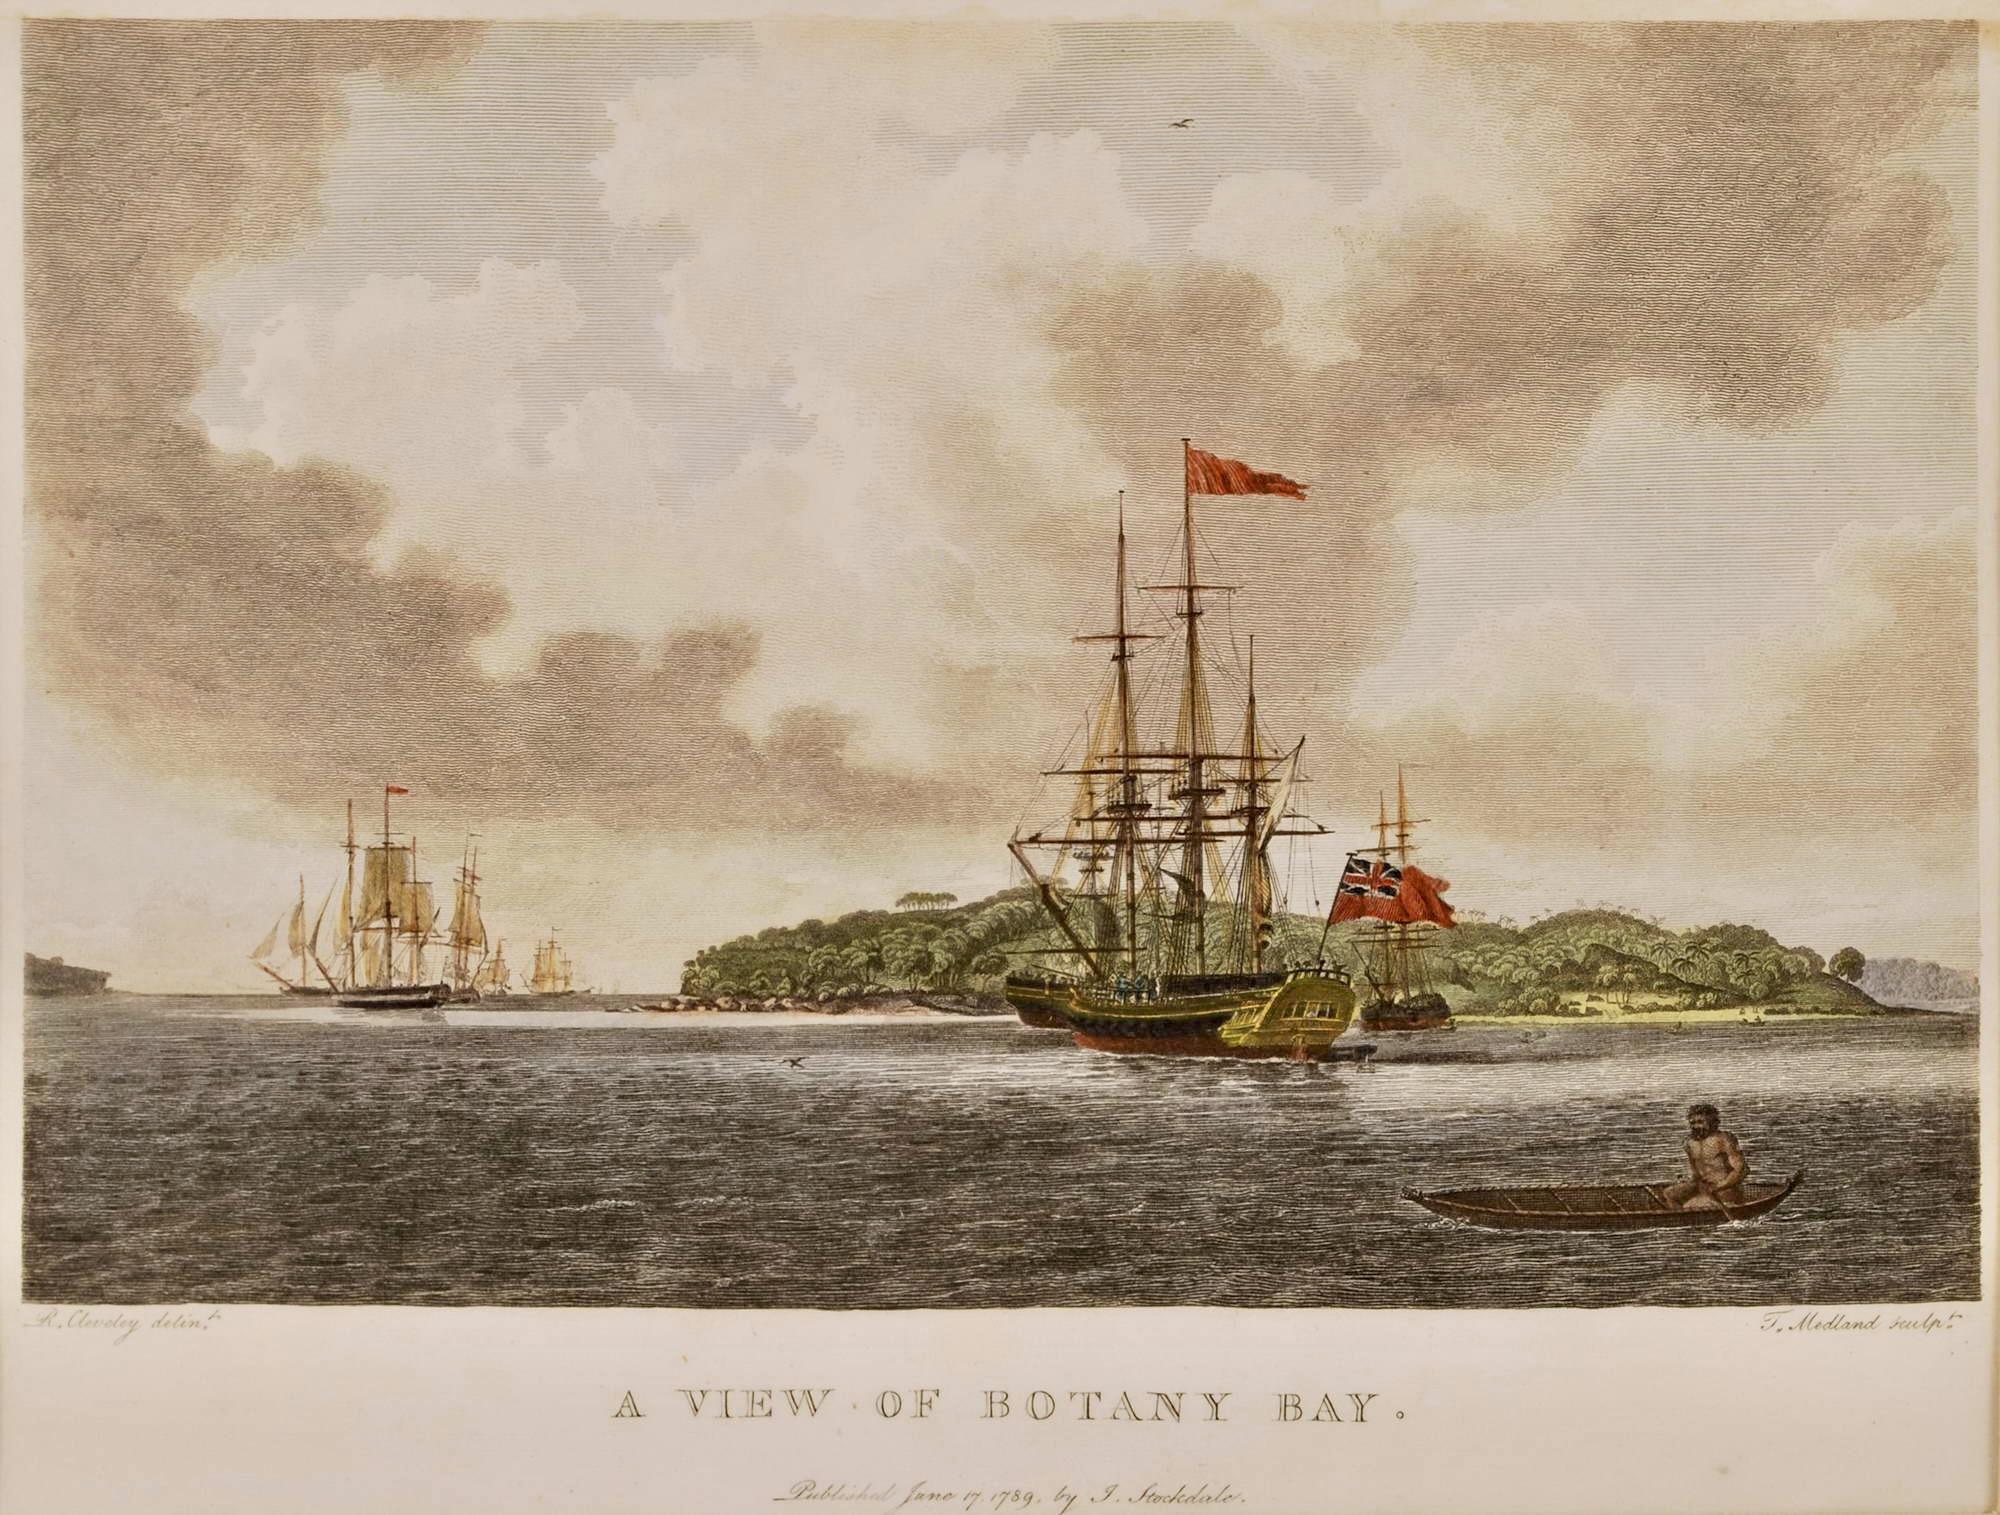 Botany Bay, Robert Cleveley, 1789, gravure en couleurs 